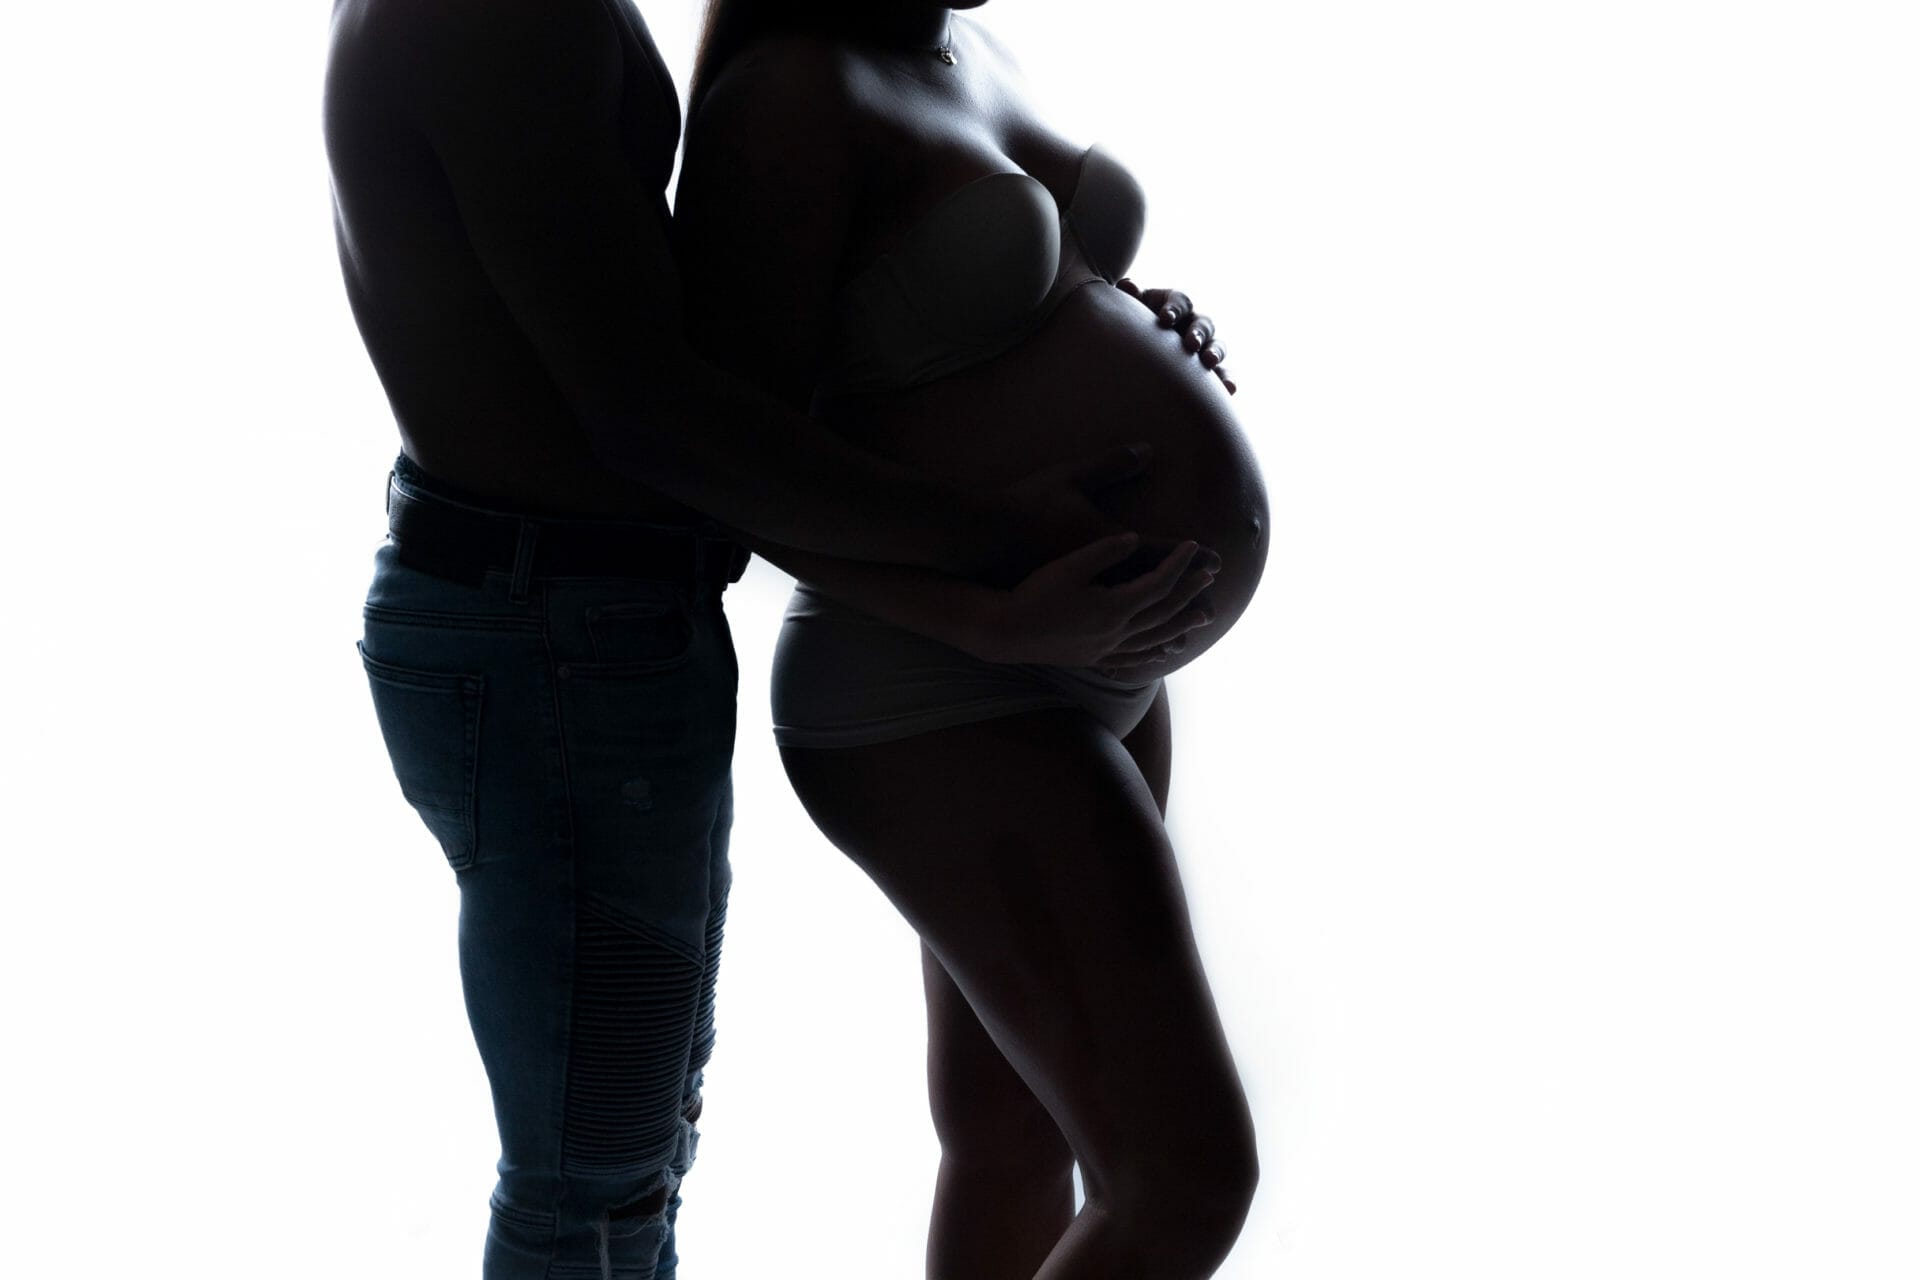 New Orleans prenatal massage location welcomes intimate couple maternity photo silouhette